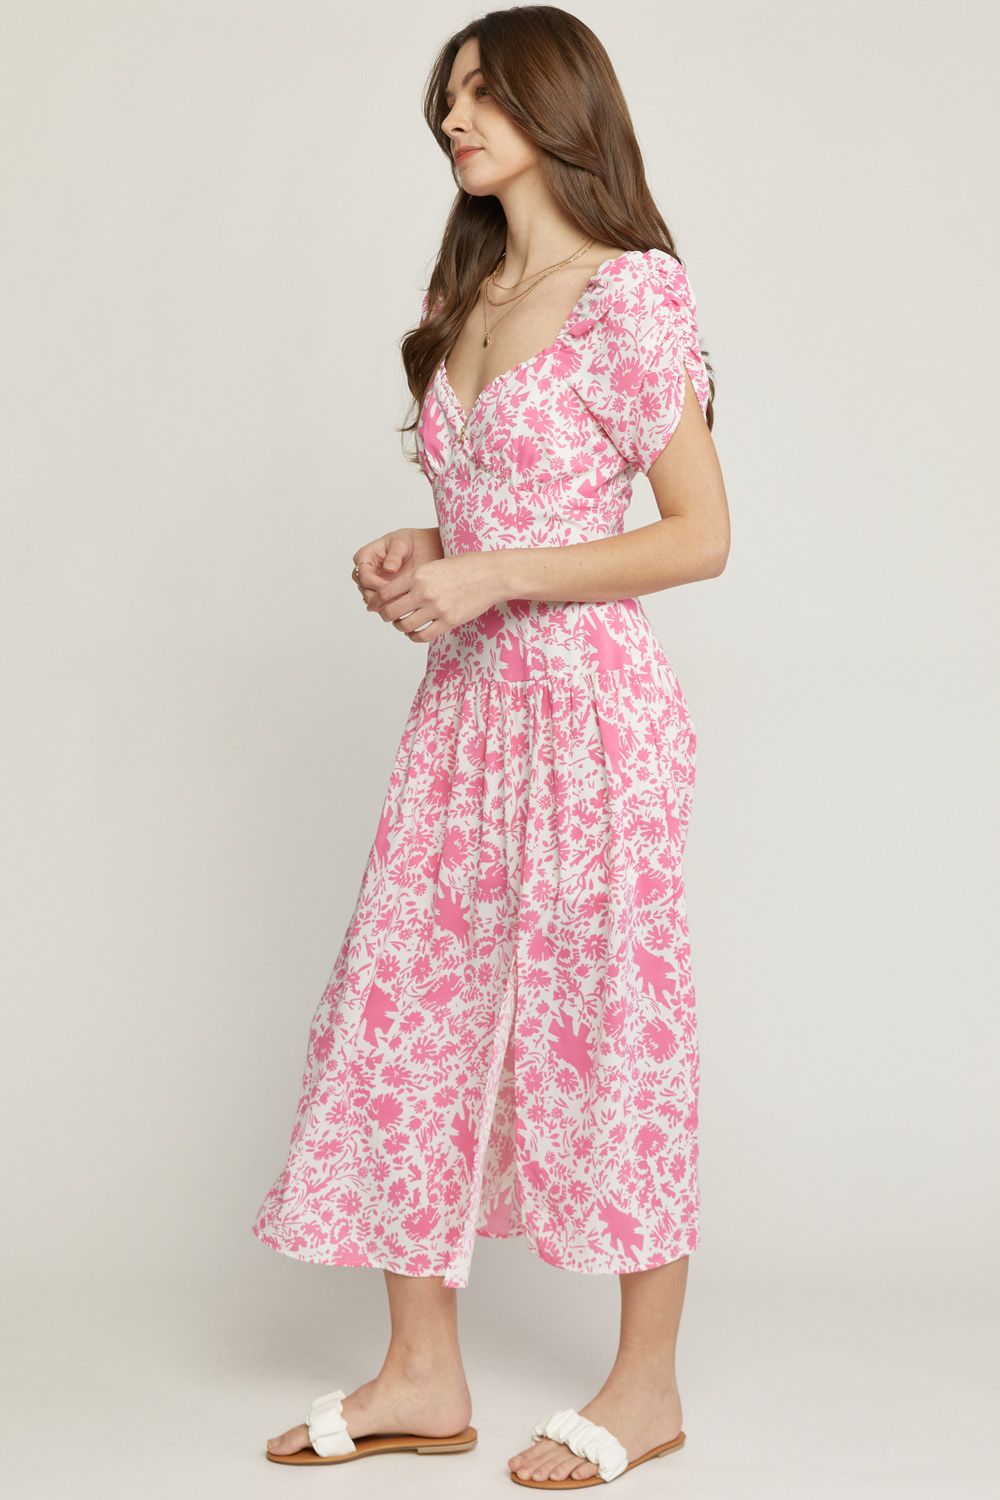 Sweetheart Pink Midi Dress-Dresses-Anatomy Clothing Boutique in Brenham, Texas